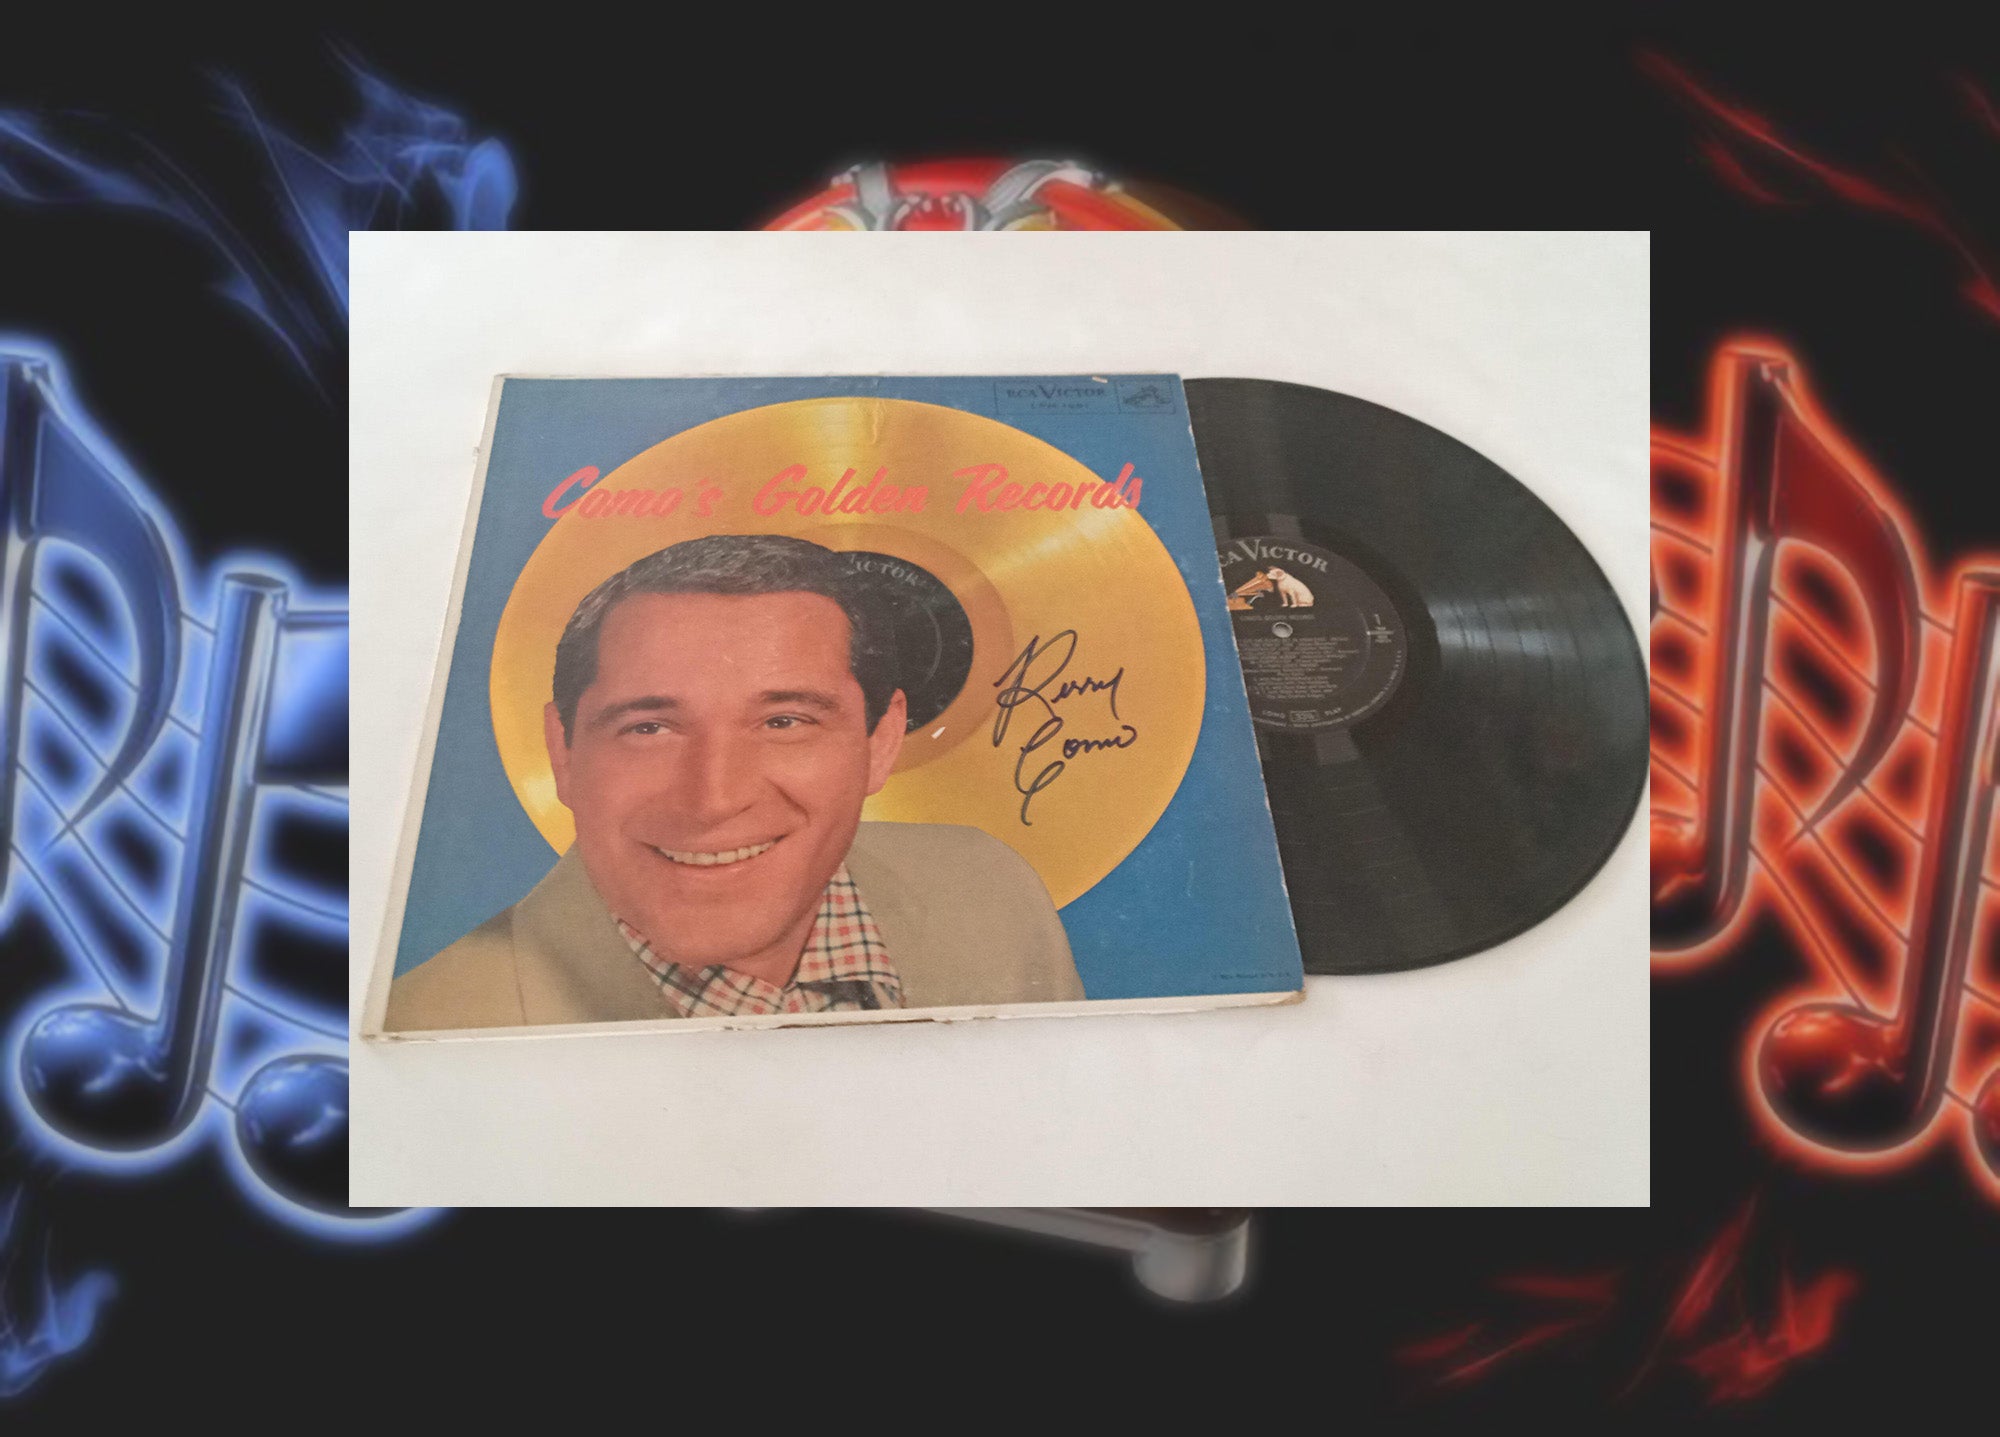 Perry Como 'Como's Golden Records' LP signed